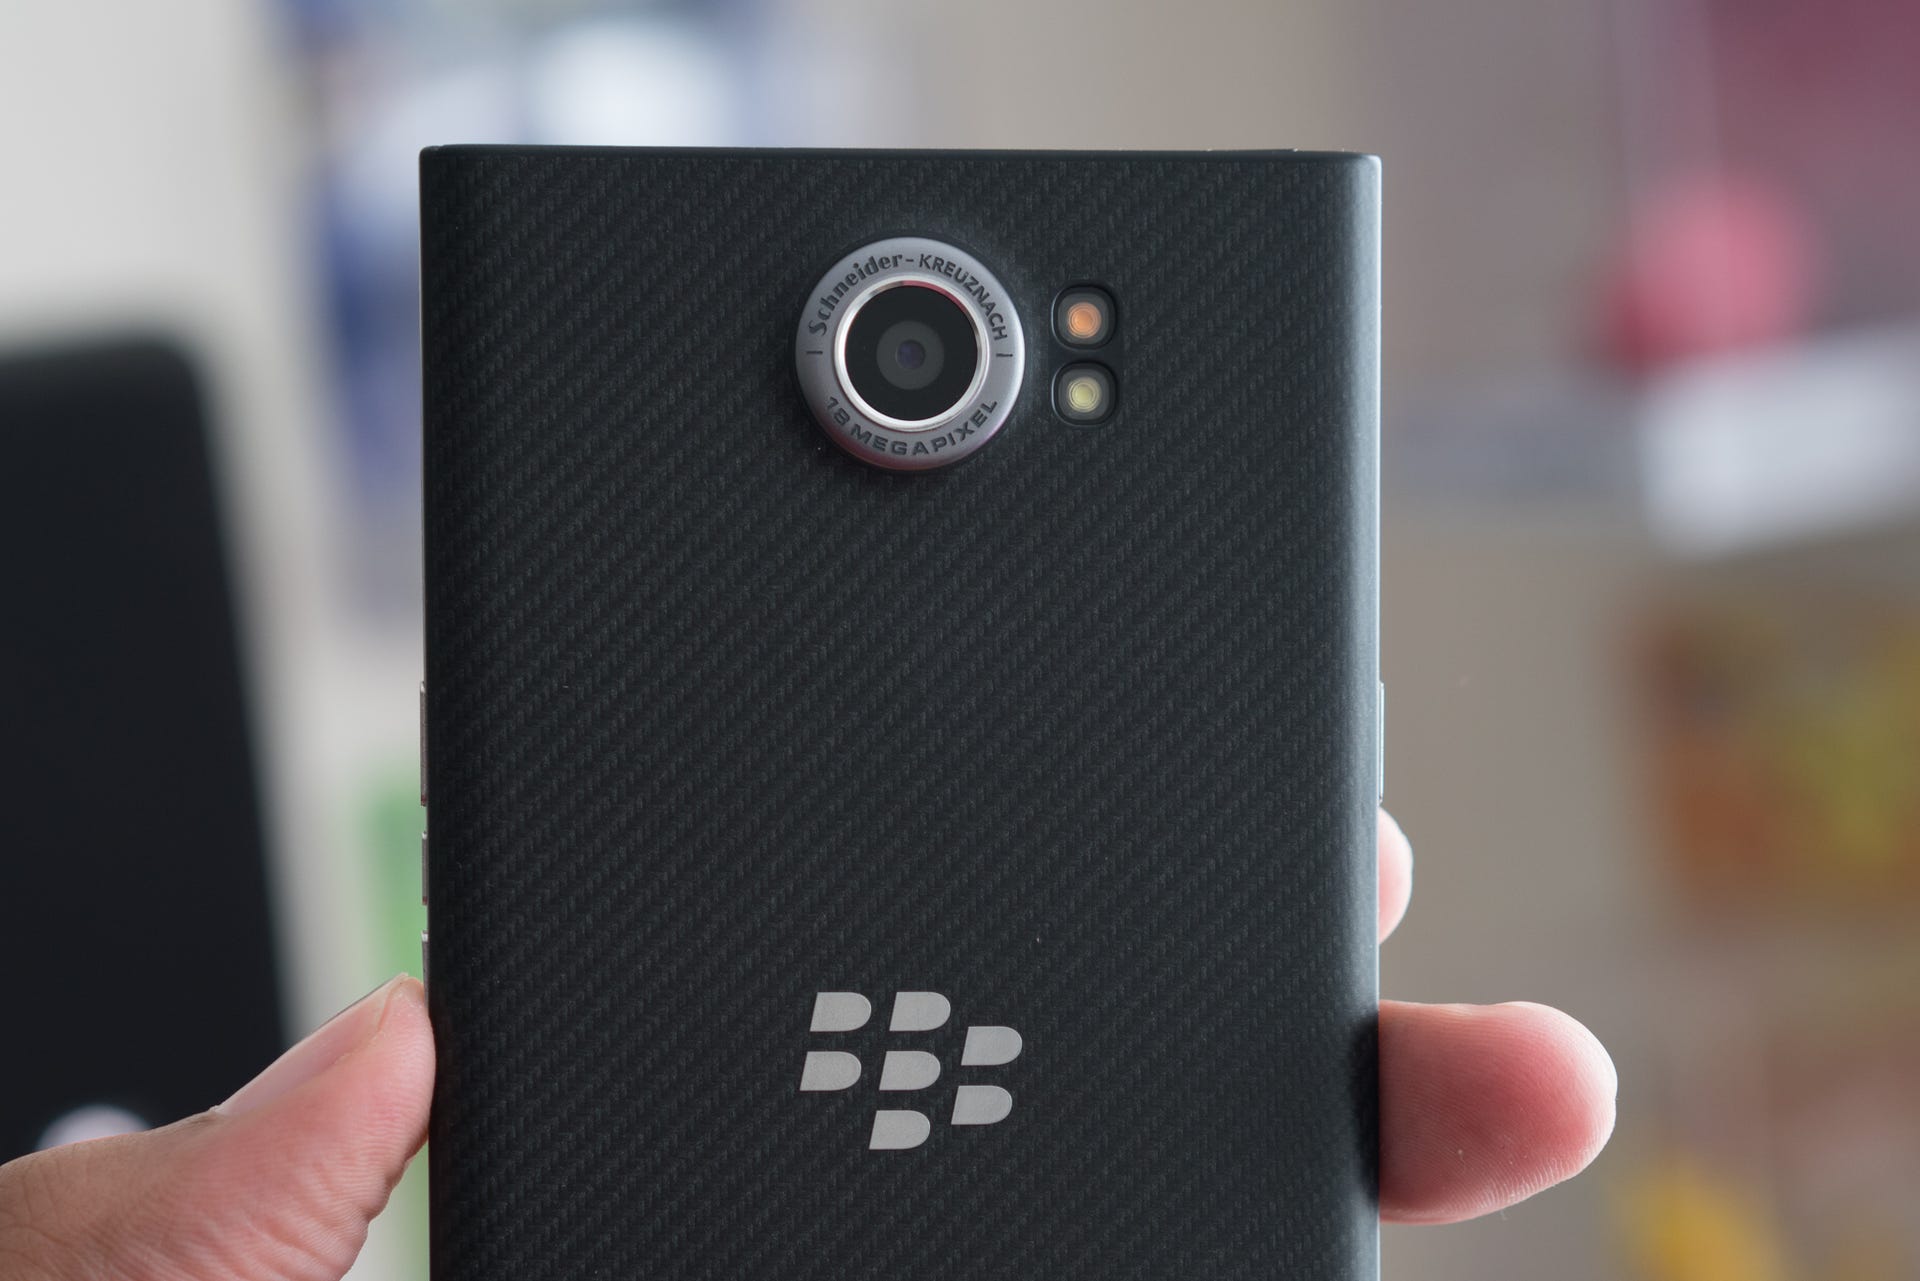 blackberry-priv-review-02241-2.jpg